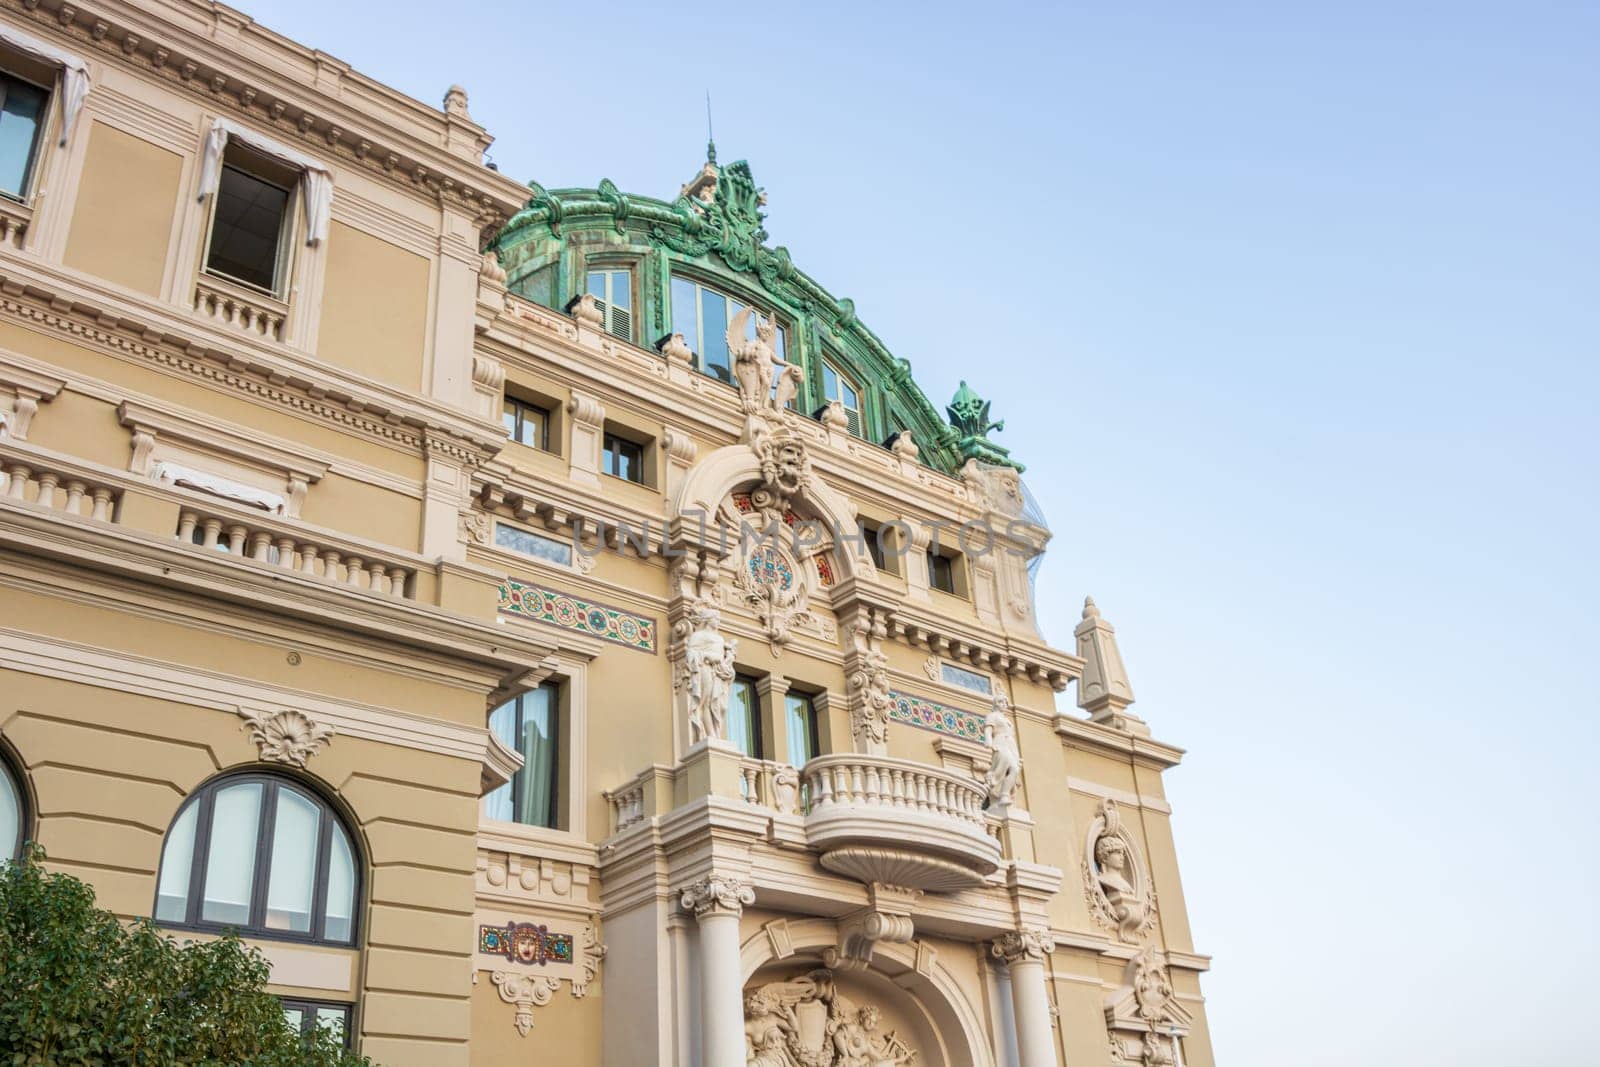 The Monte Carlo Casino, Principality of Monaco by vladispas